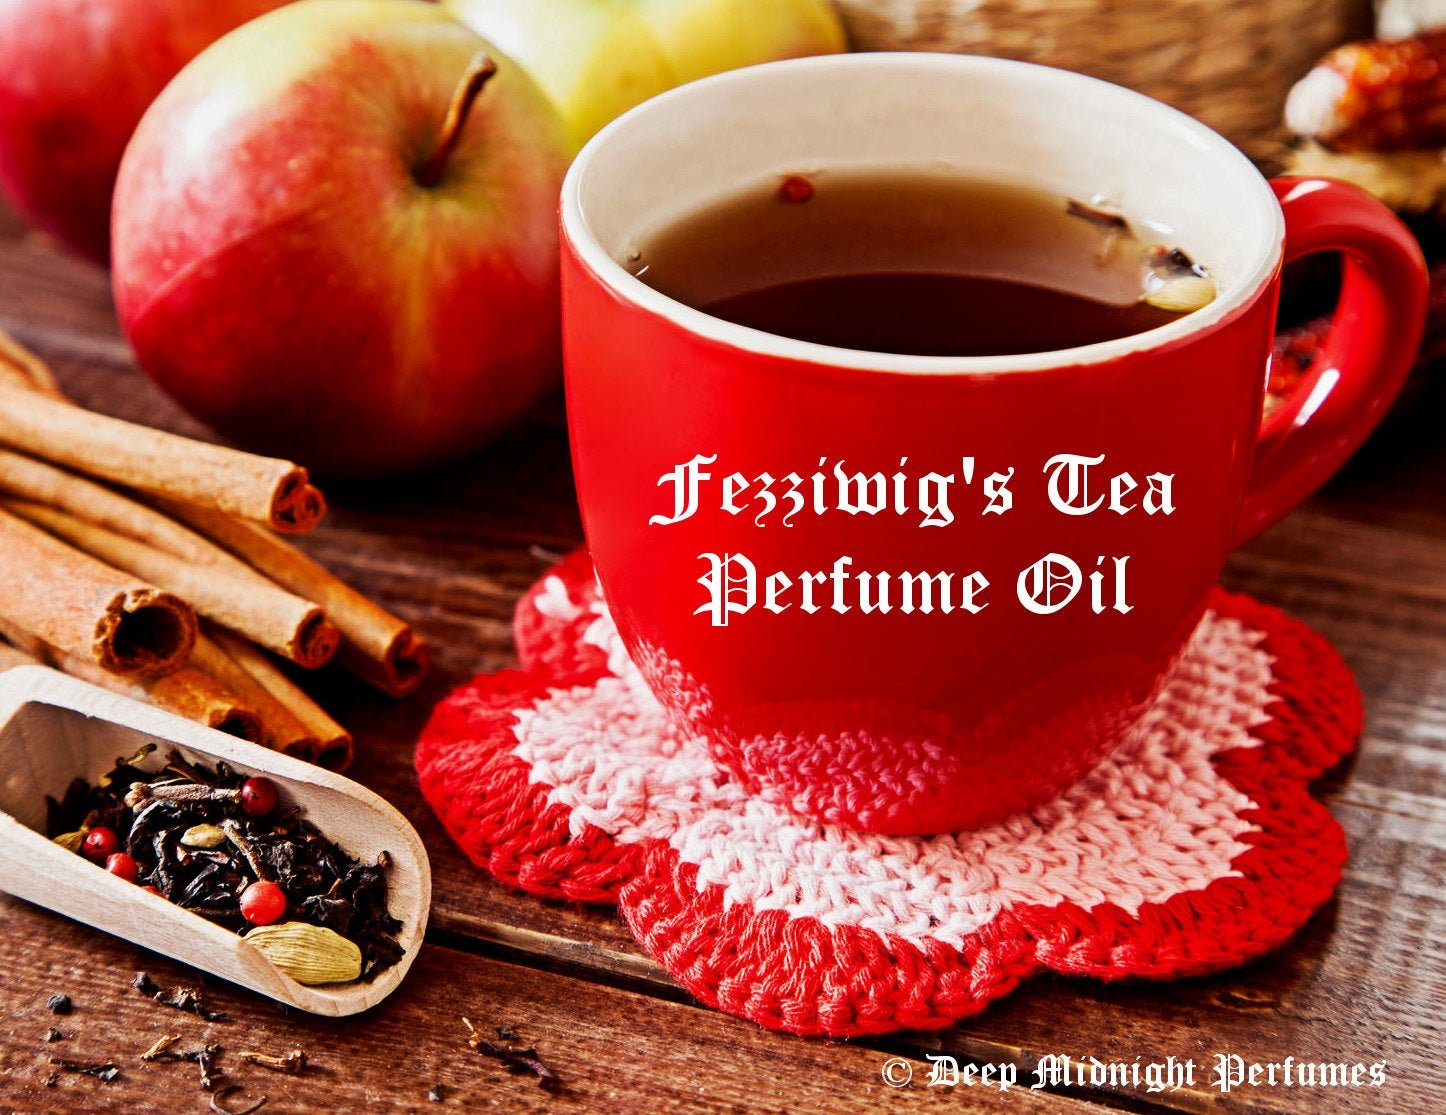 Fezziwig's Tea Perfume Oil - Dark English Tea, Cardamom, Cinnamon, Peppercorn, Apples, Clove, Orange Peel - Chrismas Perfume - Holiday Scent